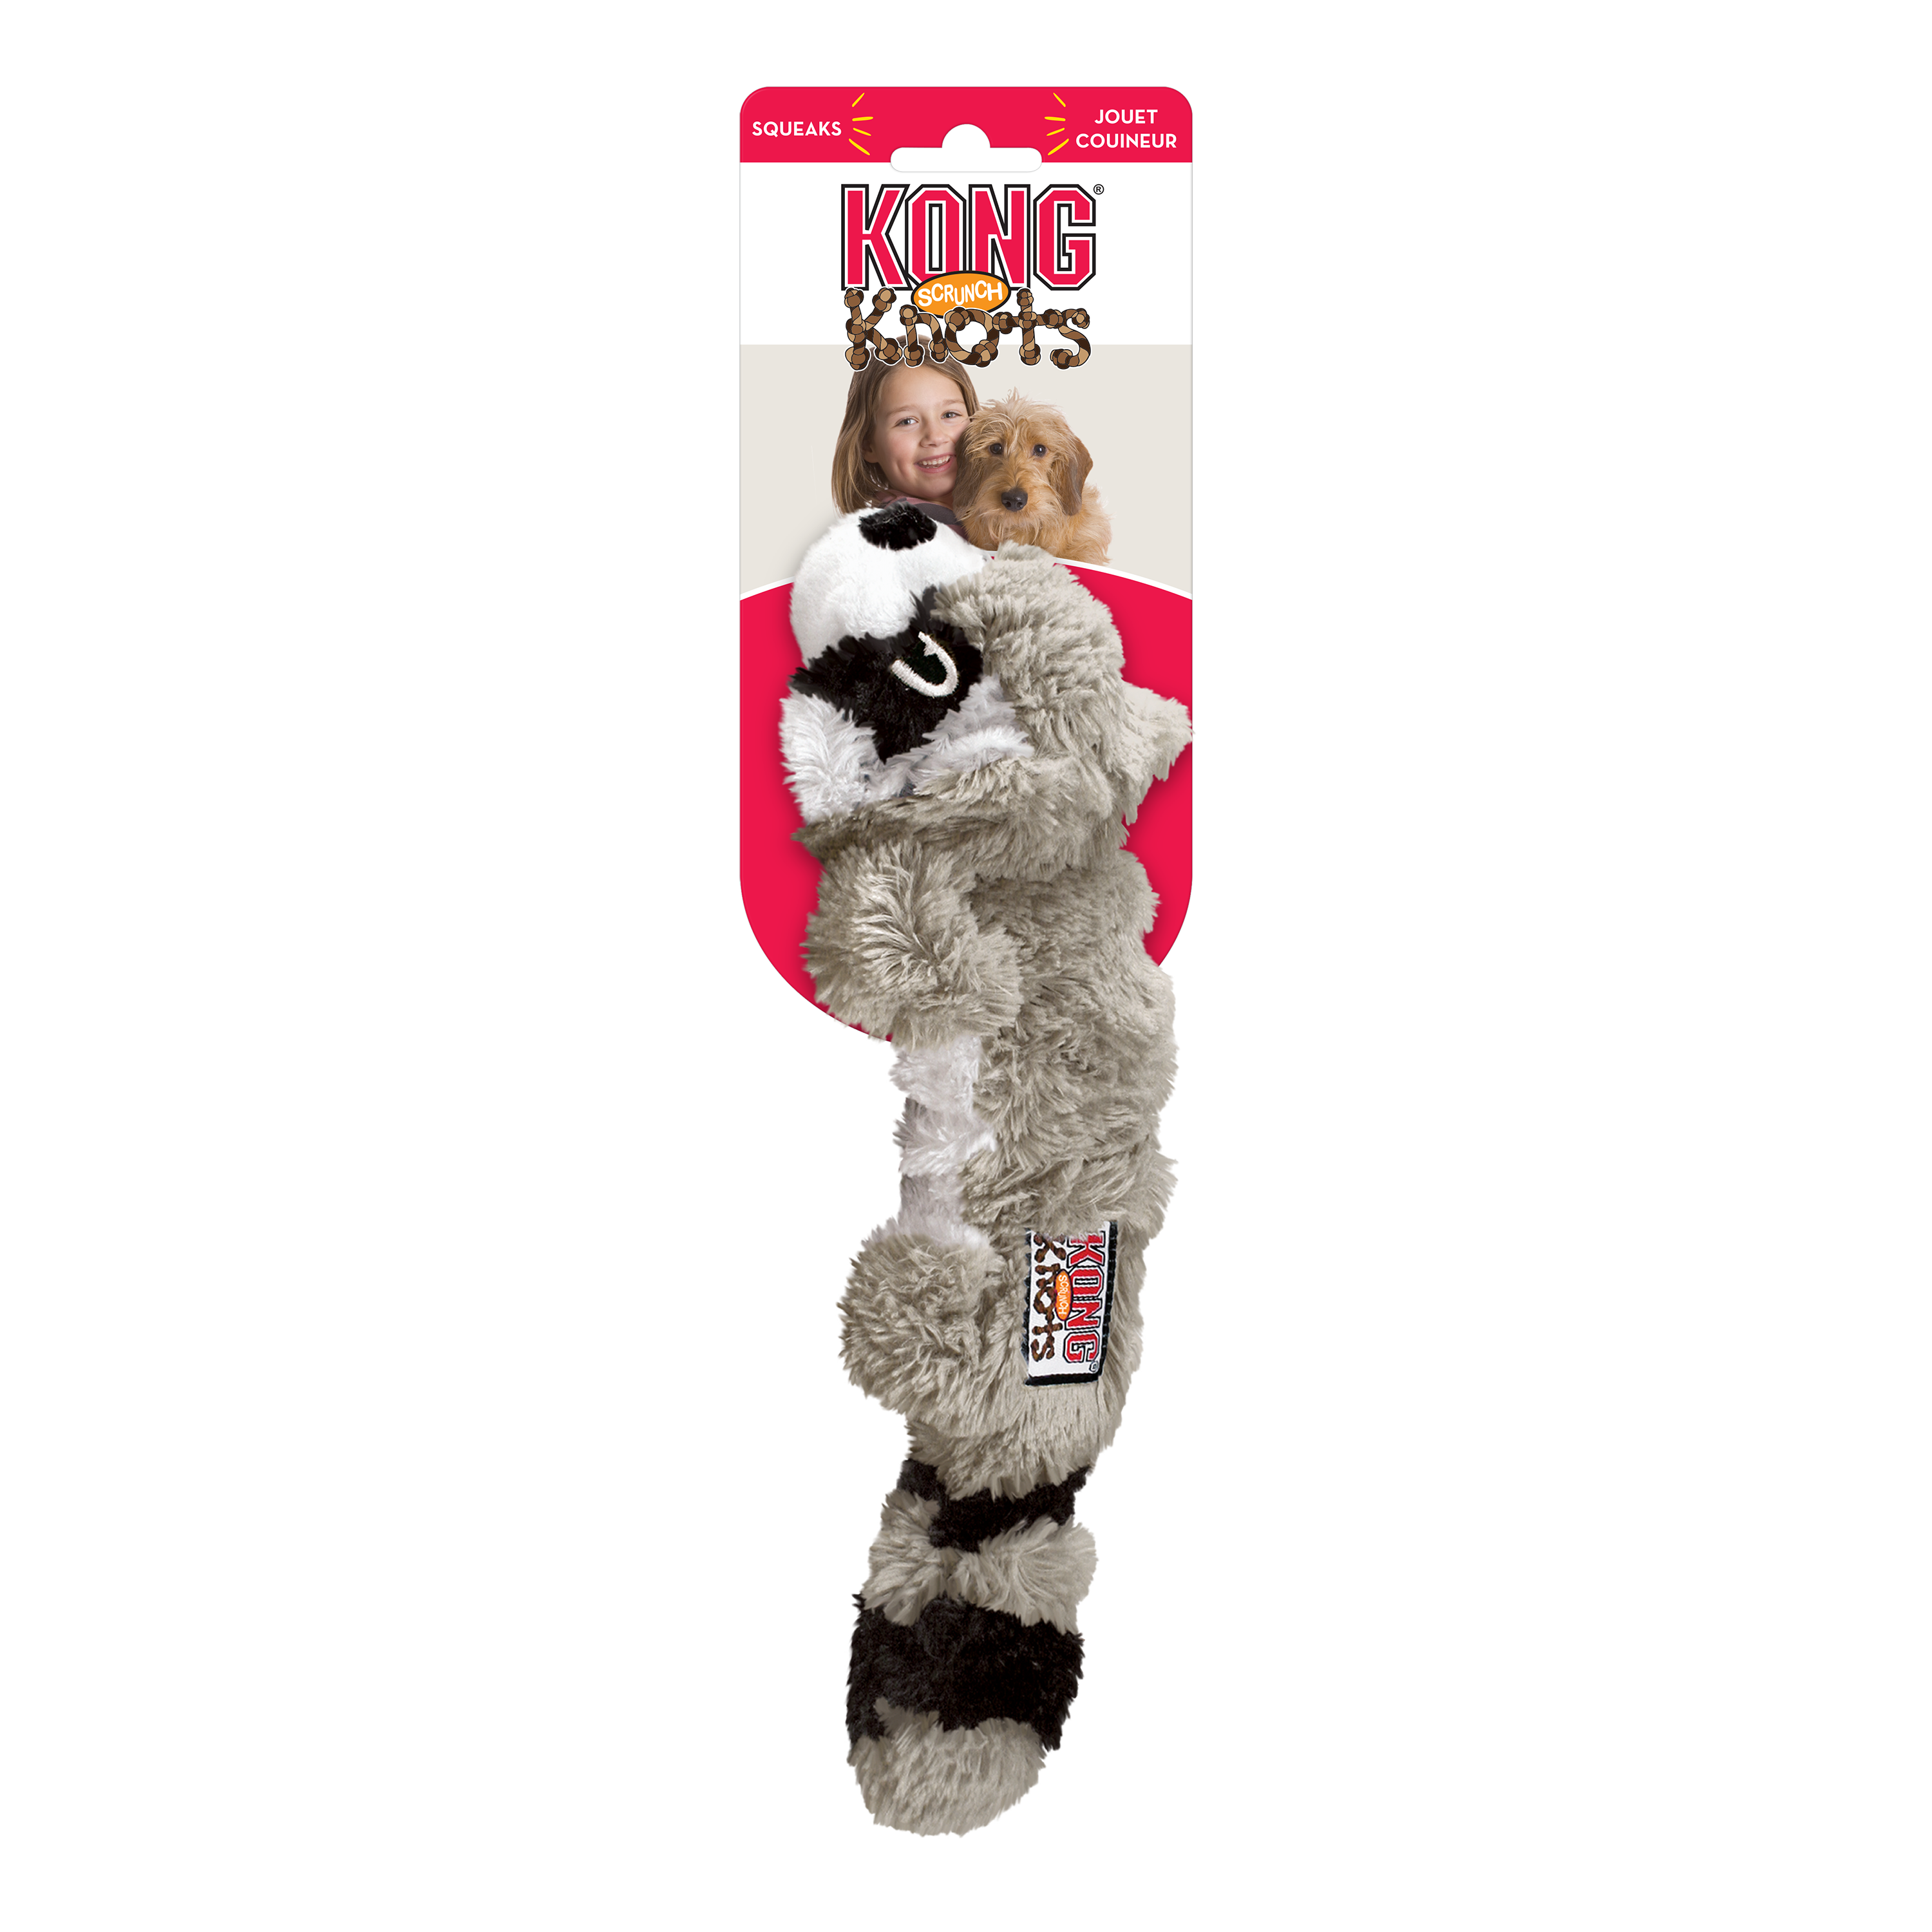 Imagem do produto Scrunch Knots Raccoon na embalagem